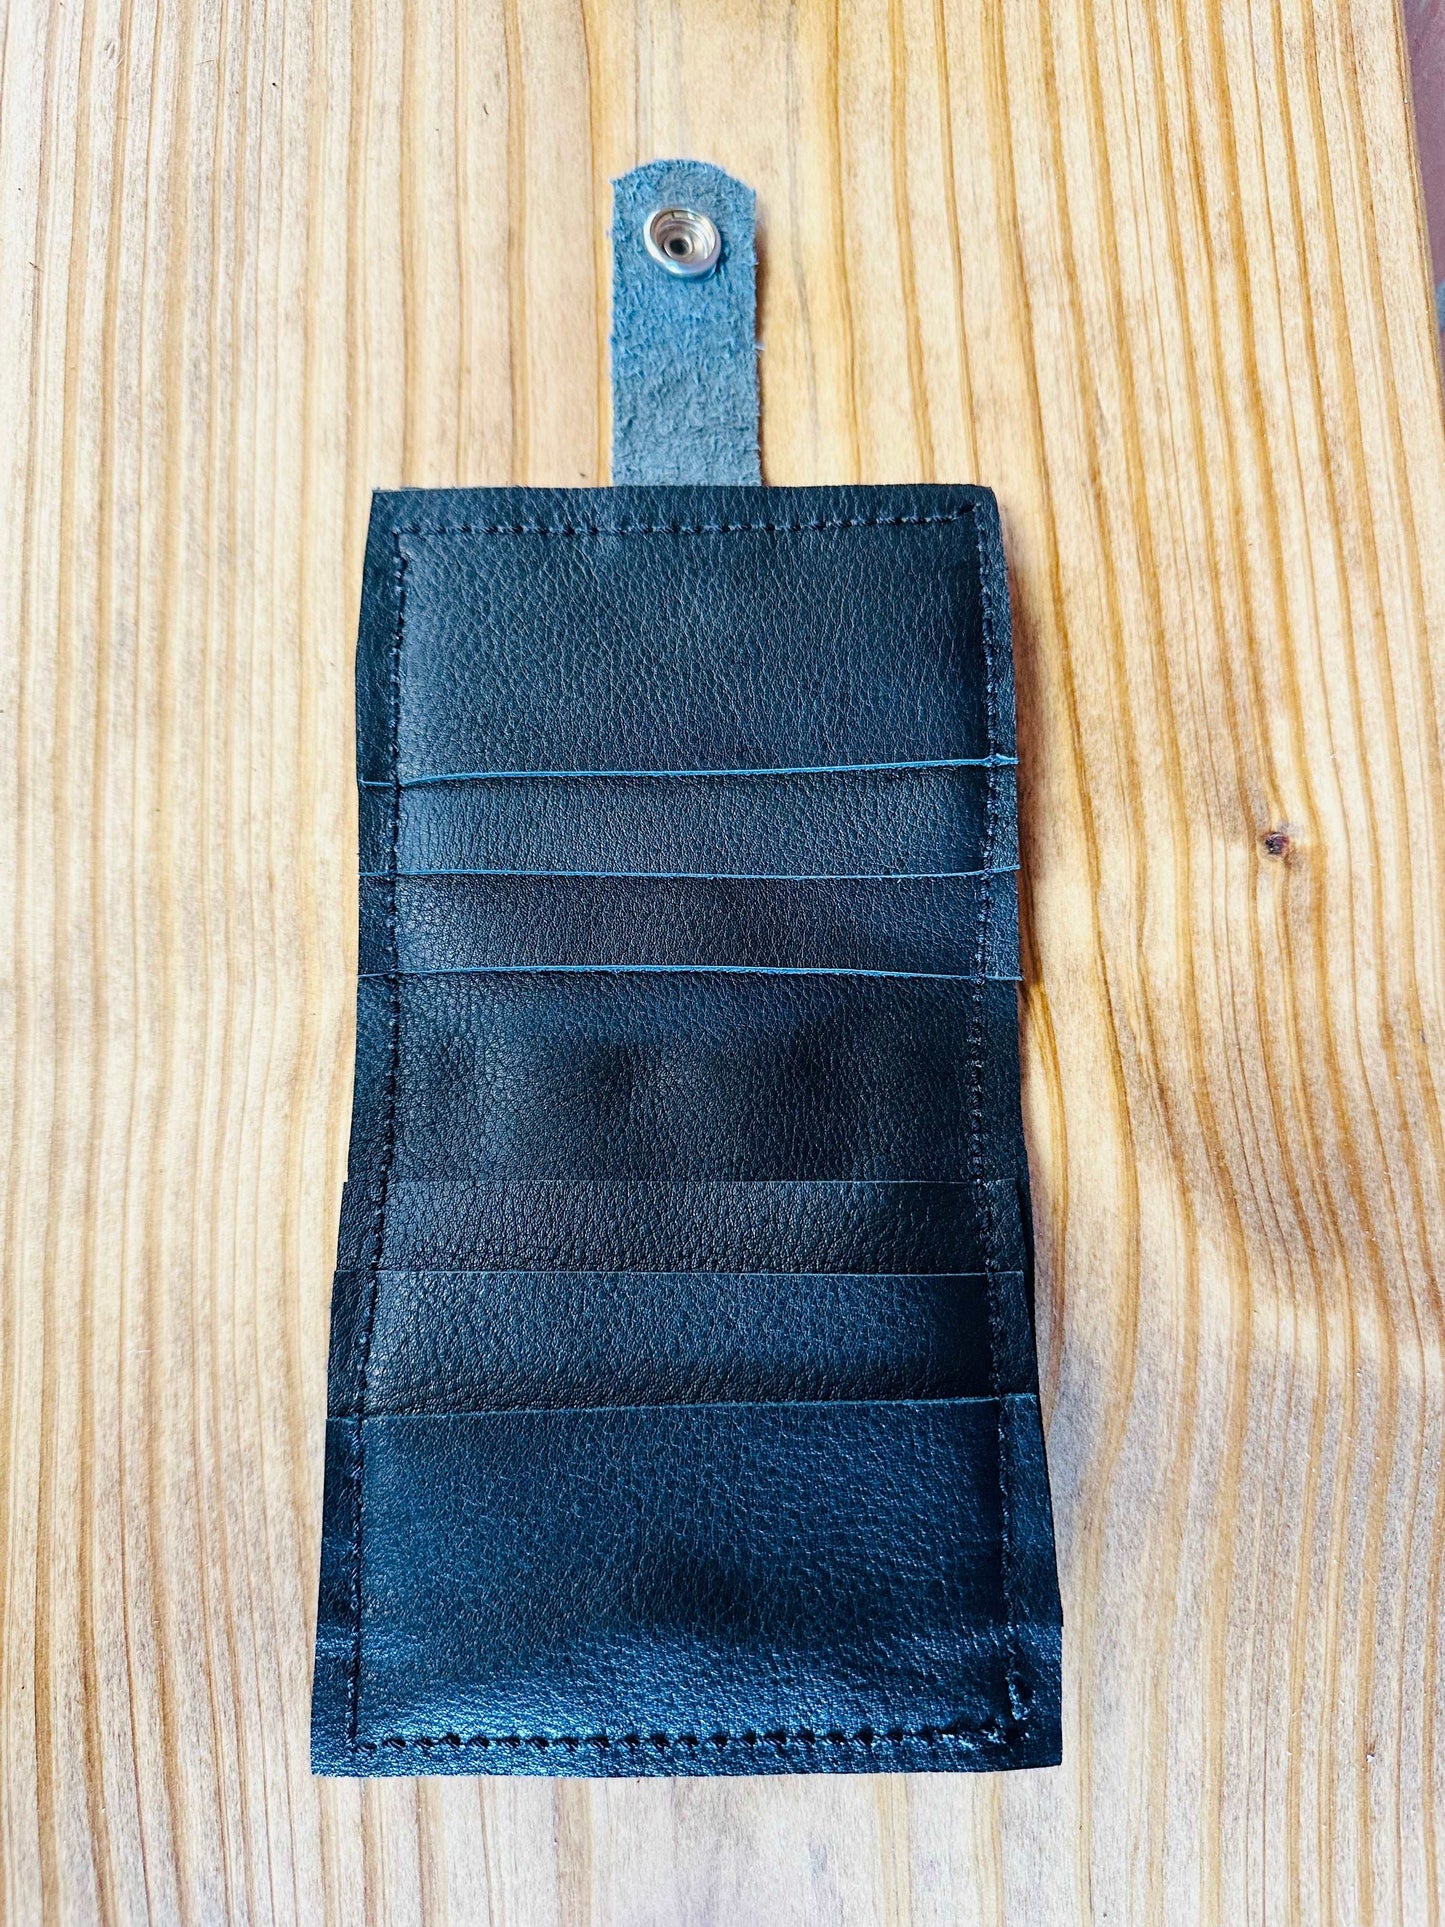 Mini Wallet - KateLynn Leatherworks